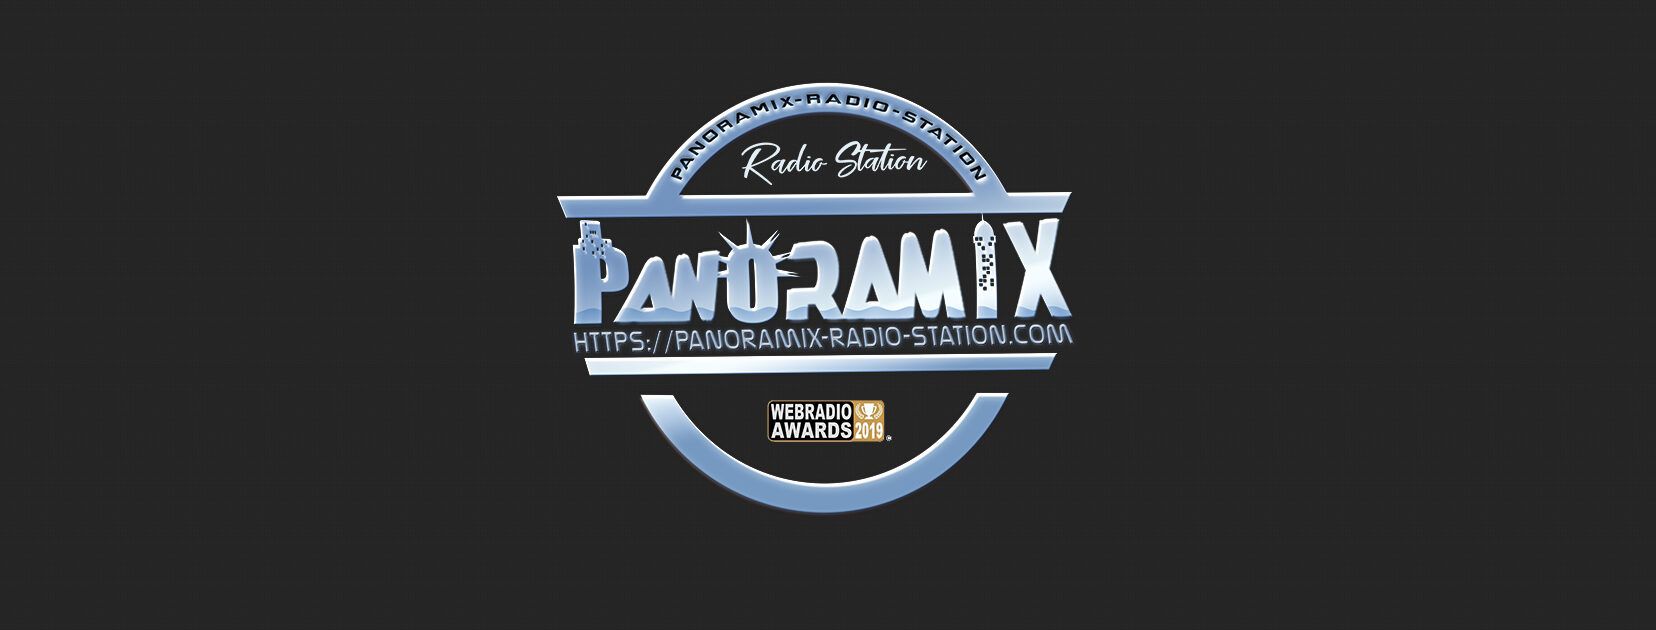 https://panoramix-radio-station.com/wp-content/uploads/2022/04/cropped-logo-BANNER-2021-2.jpg